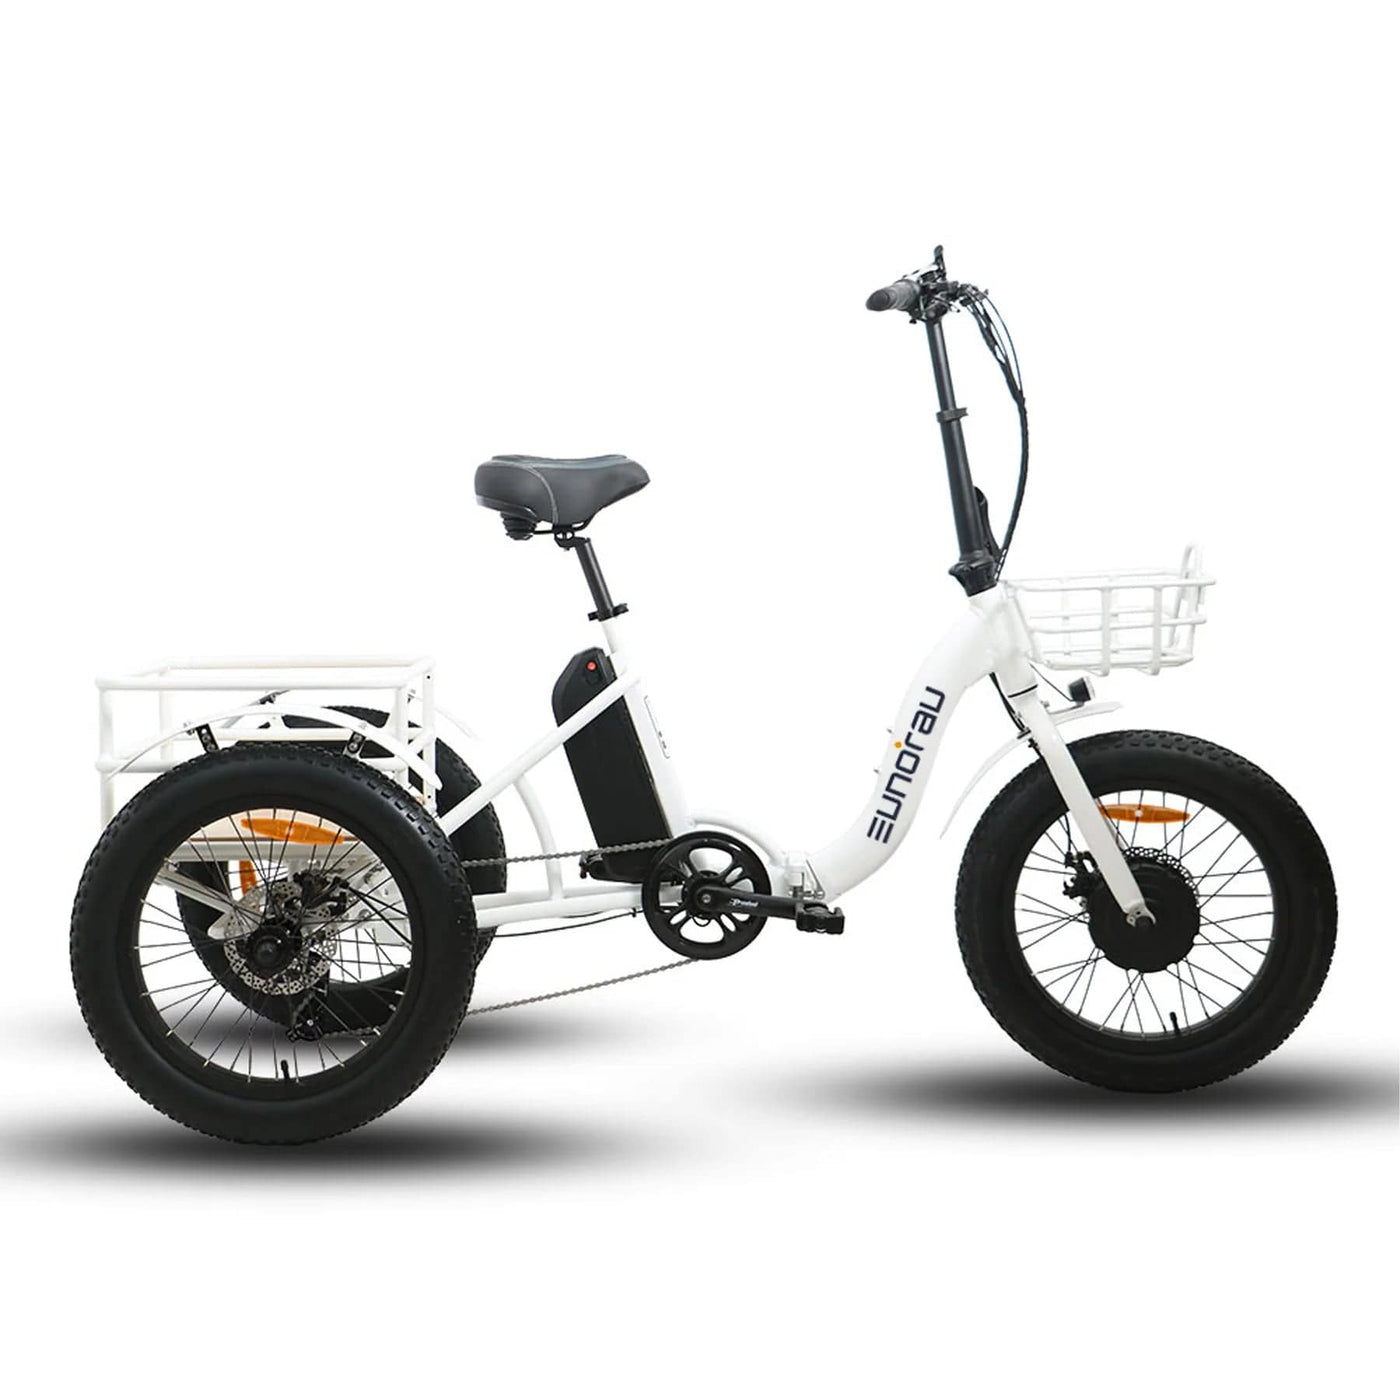 Eunorau New Trike